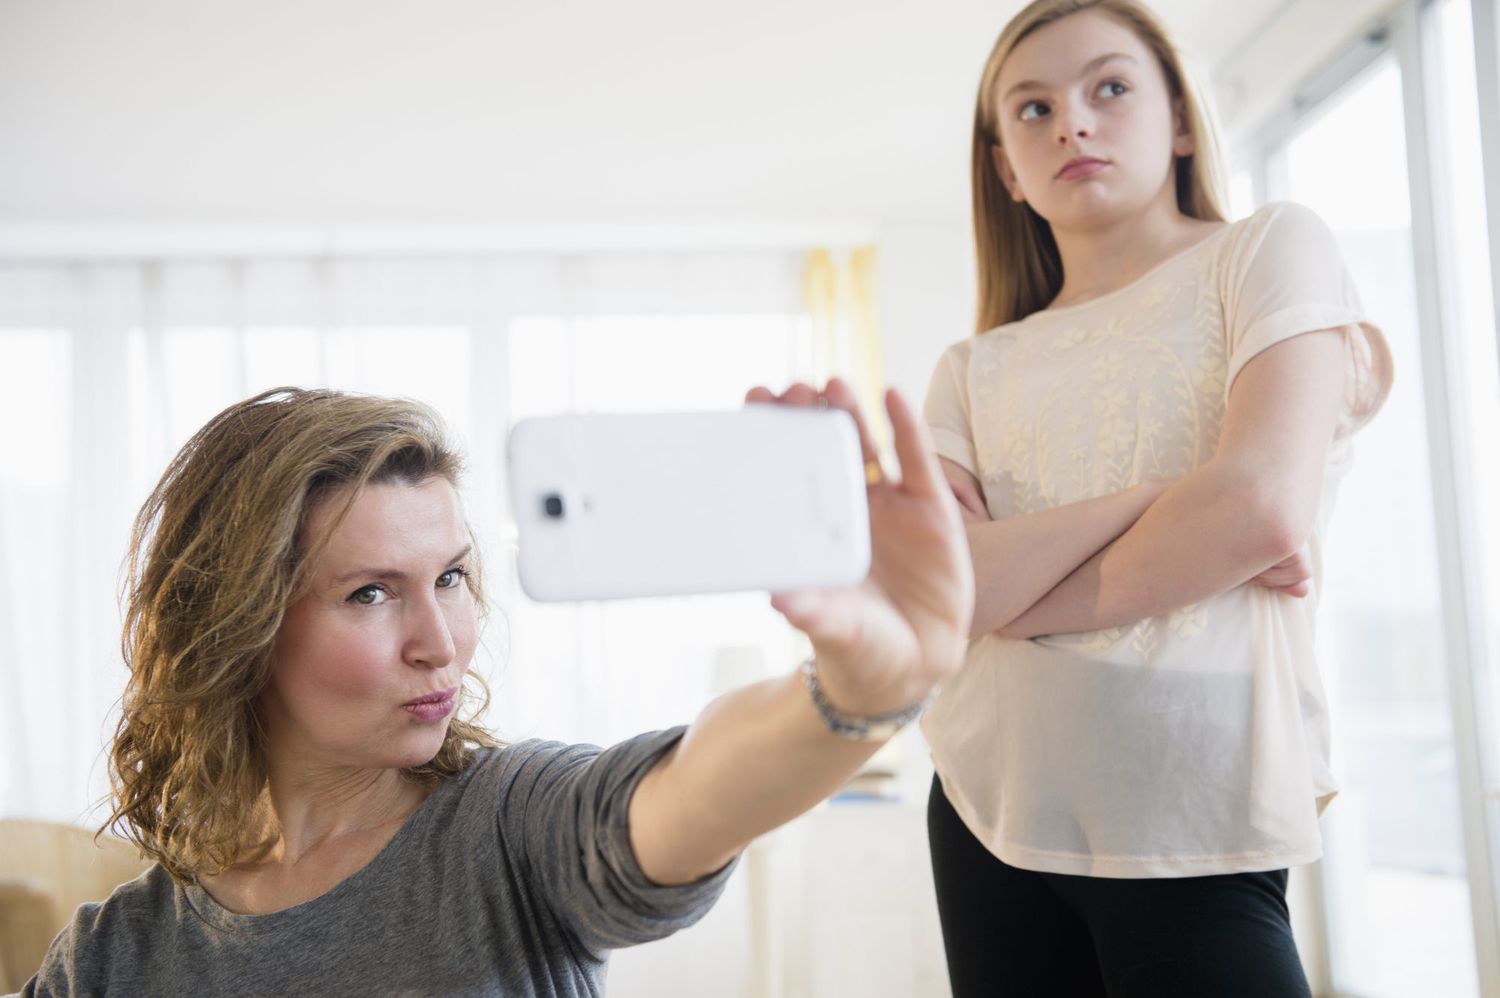 Mom taking a selfie, teen in background looking embarrassed